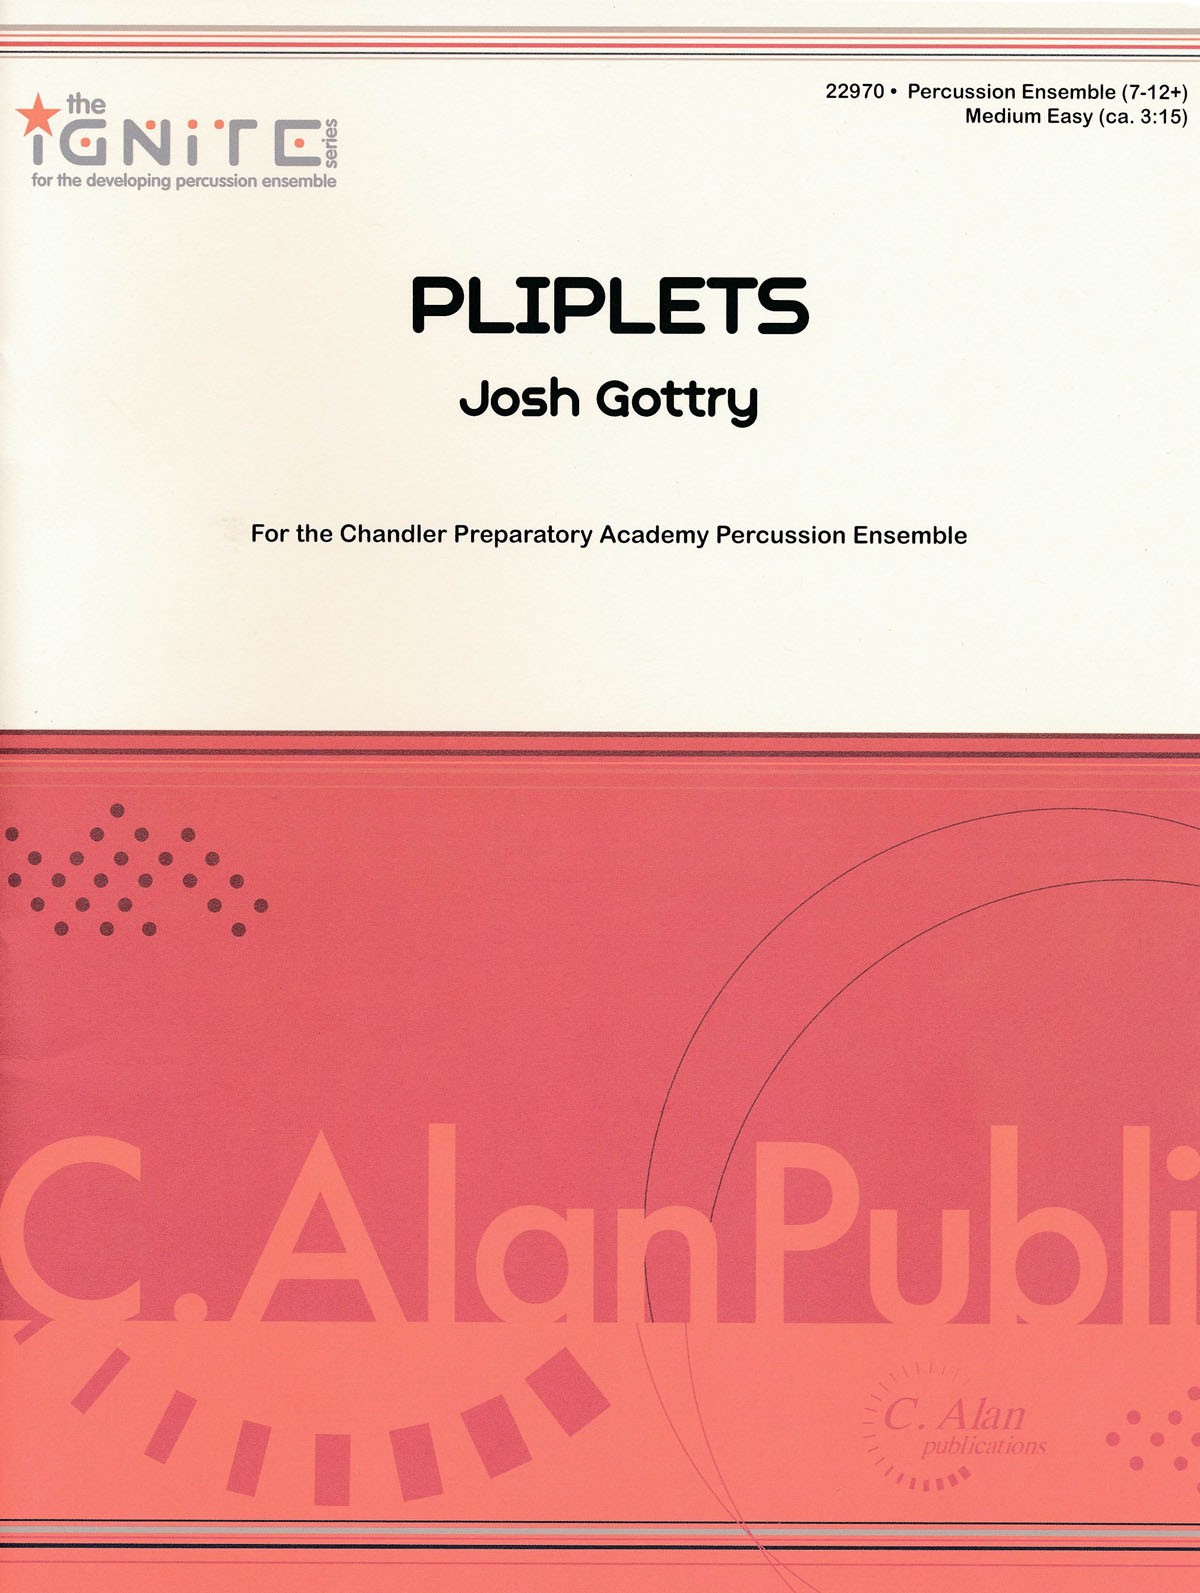 Pliplets by Josh Gottry